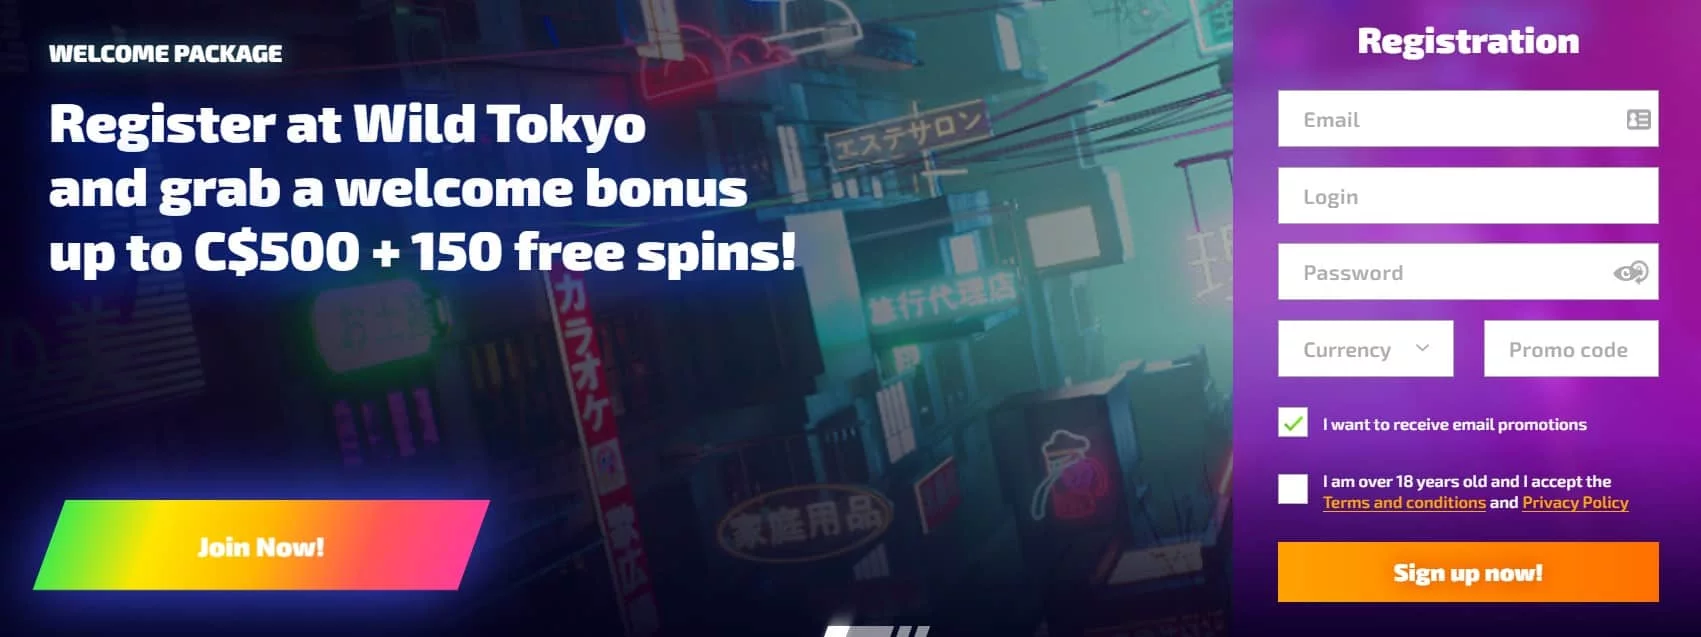 wild tokyo casino welcome bonus-min